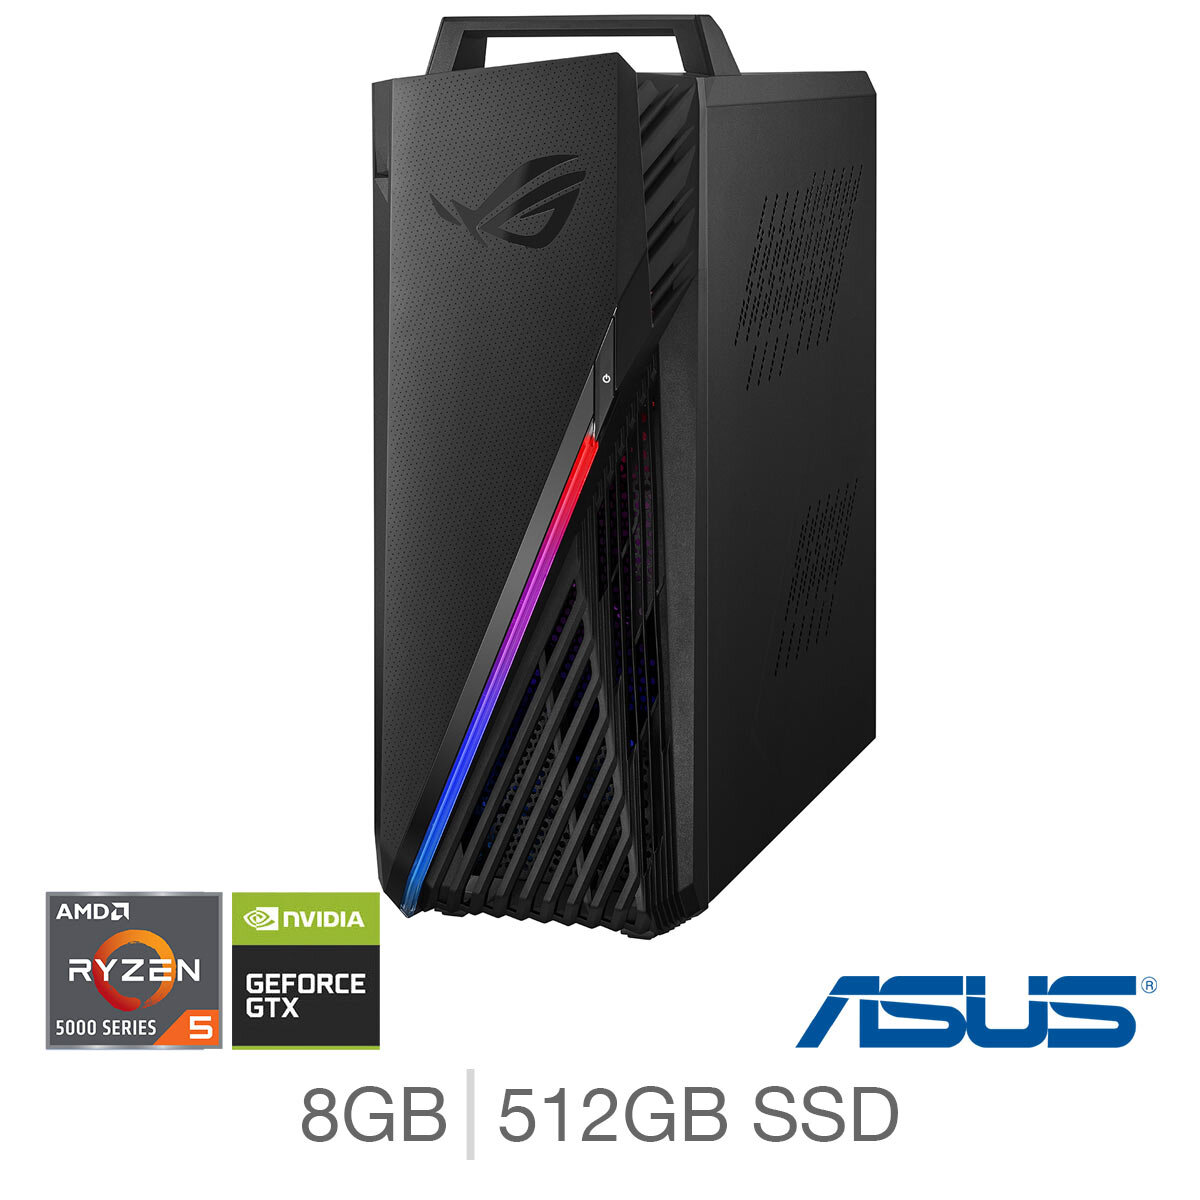 Buy ASUS ROG Strix G15, AMD Ryzen 5, 8GB RAM, 512GB SSD, NVIDIA GeForce GTX 1650, Gaming Desktop PC G15DK-R5600X176T at Costco.co.uk